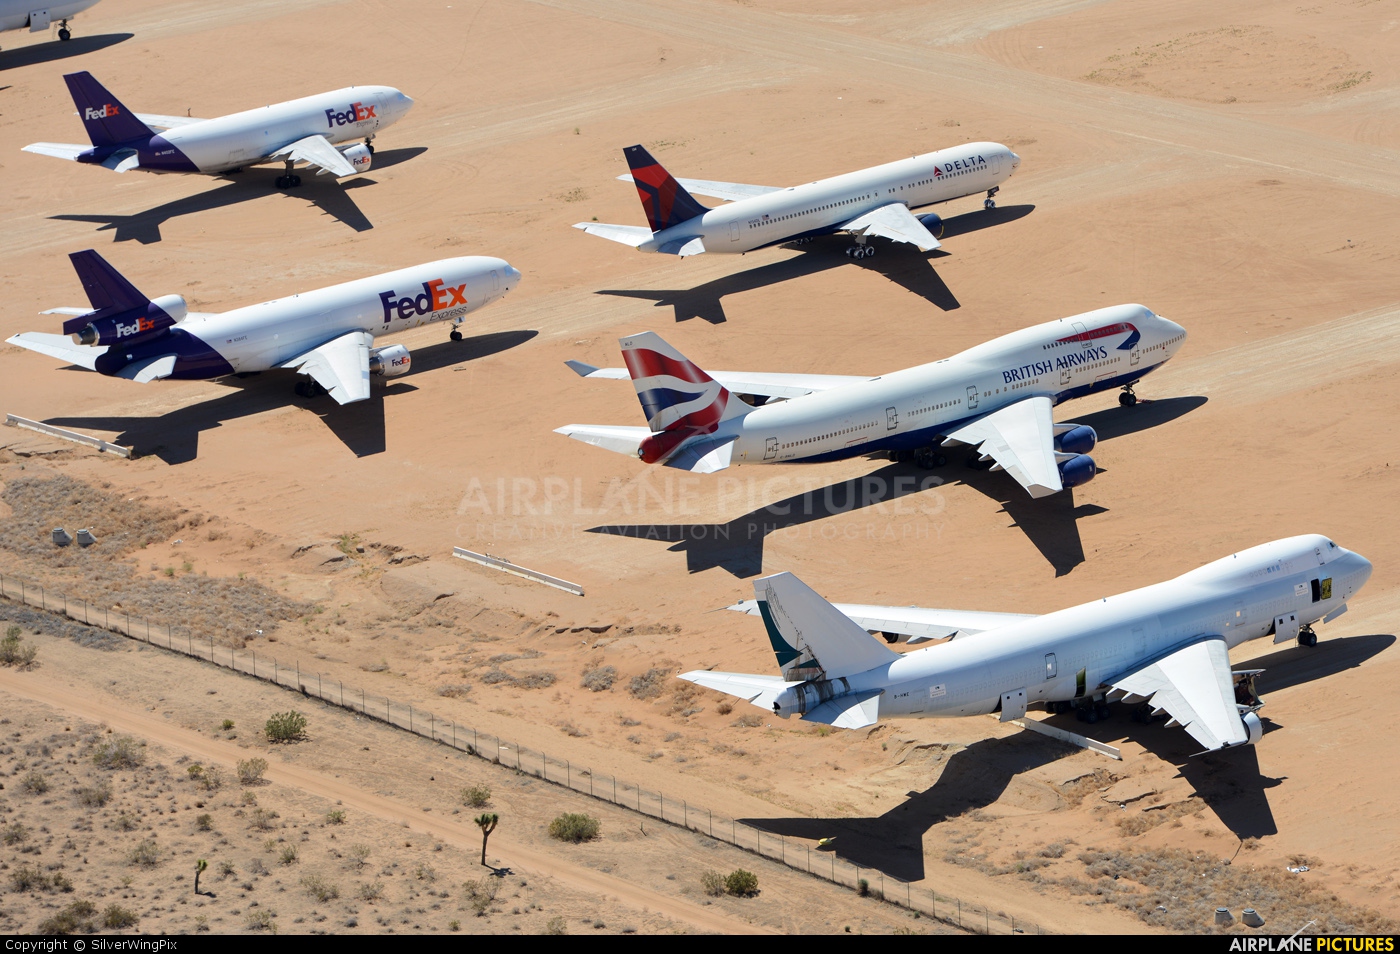 British Airways G-BNLD aircraft at Victorville - Southern California Logistics